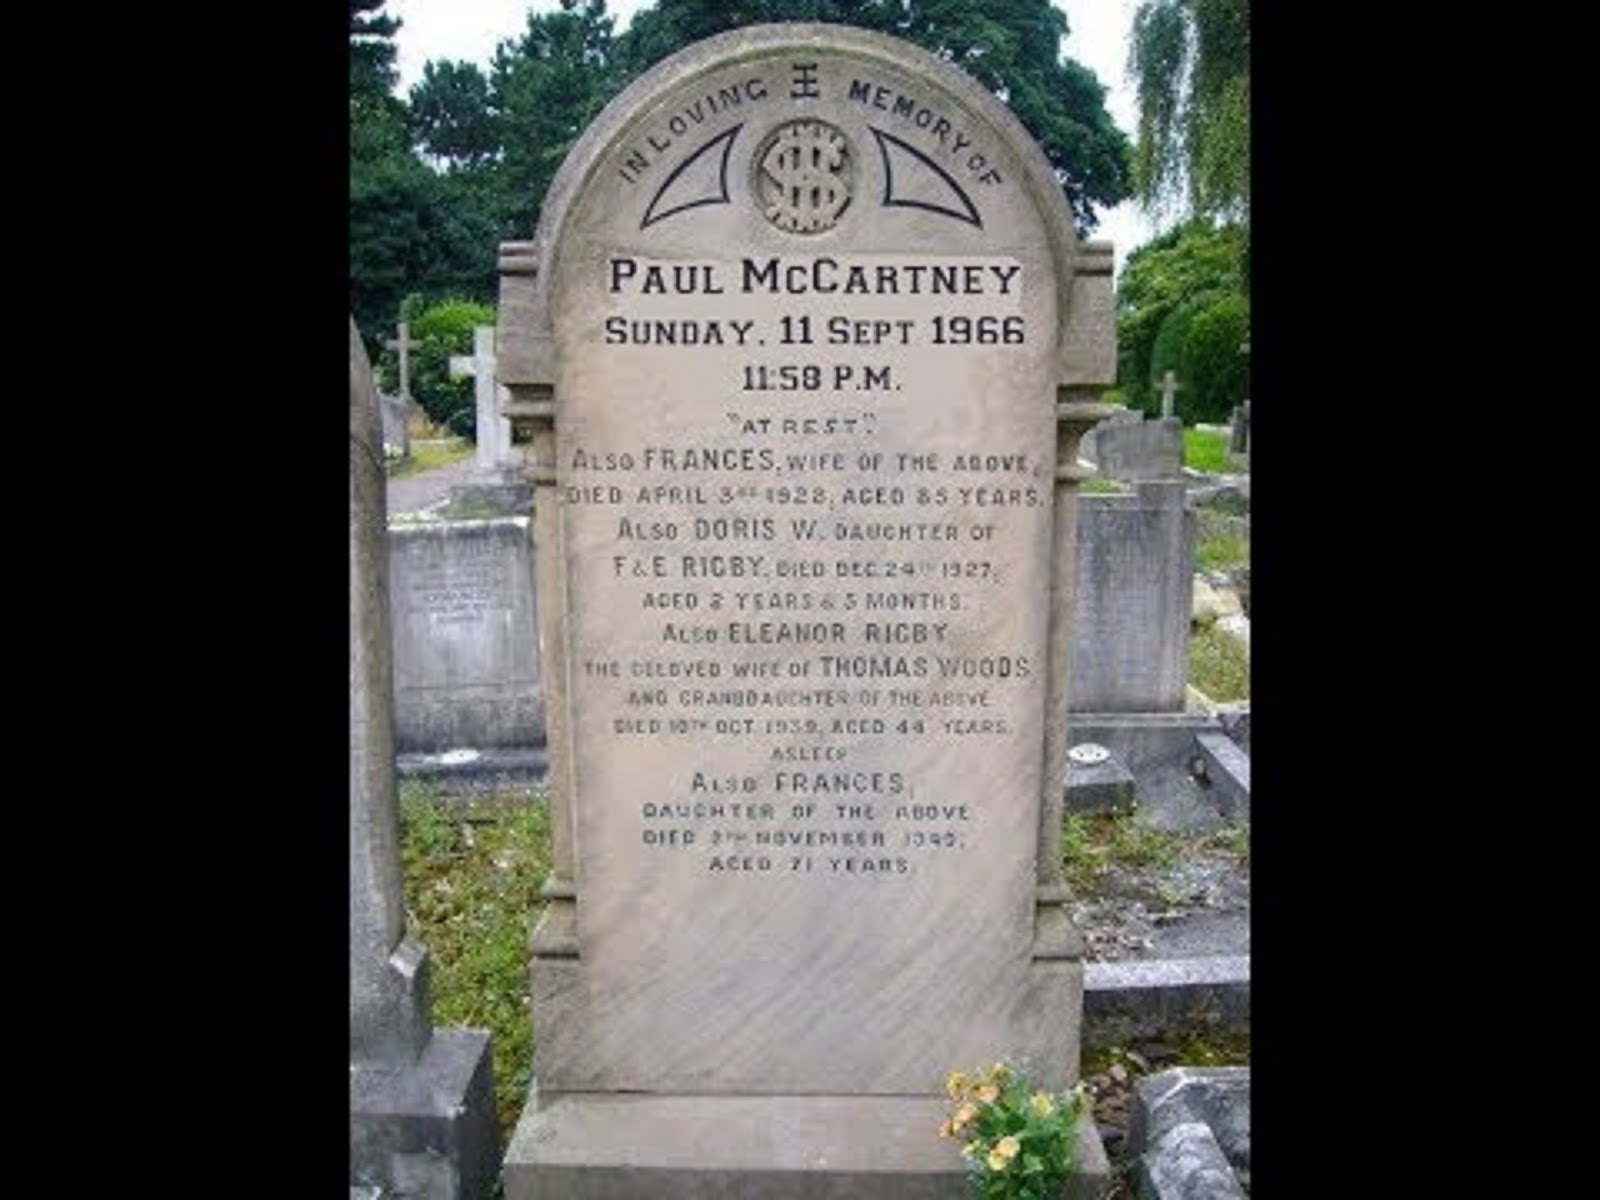 PAUL McCARTNEY'S  GRAVE STONE - (FAKE)